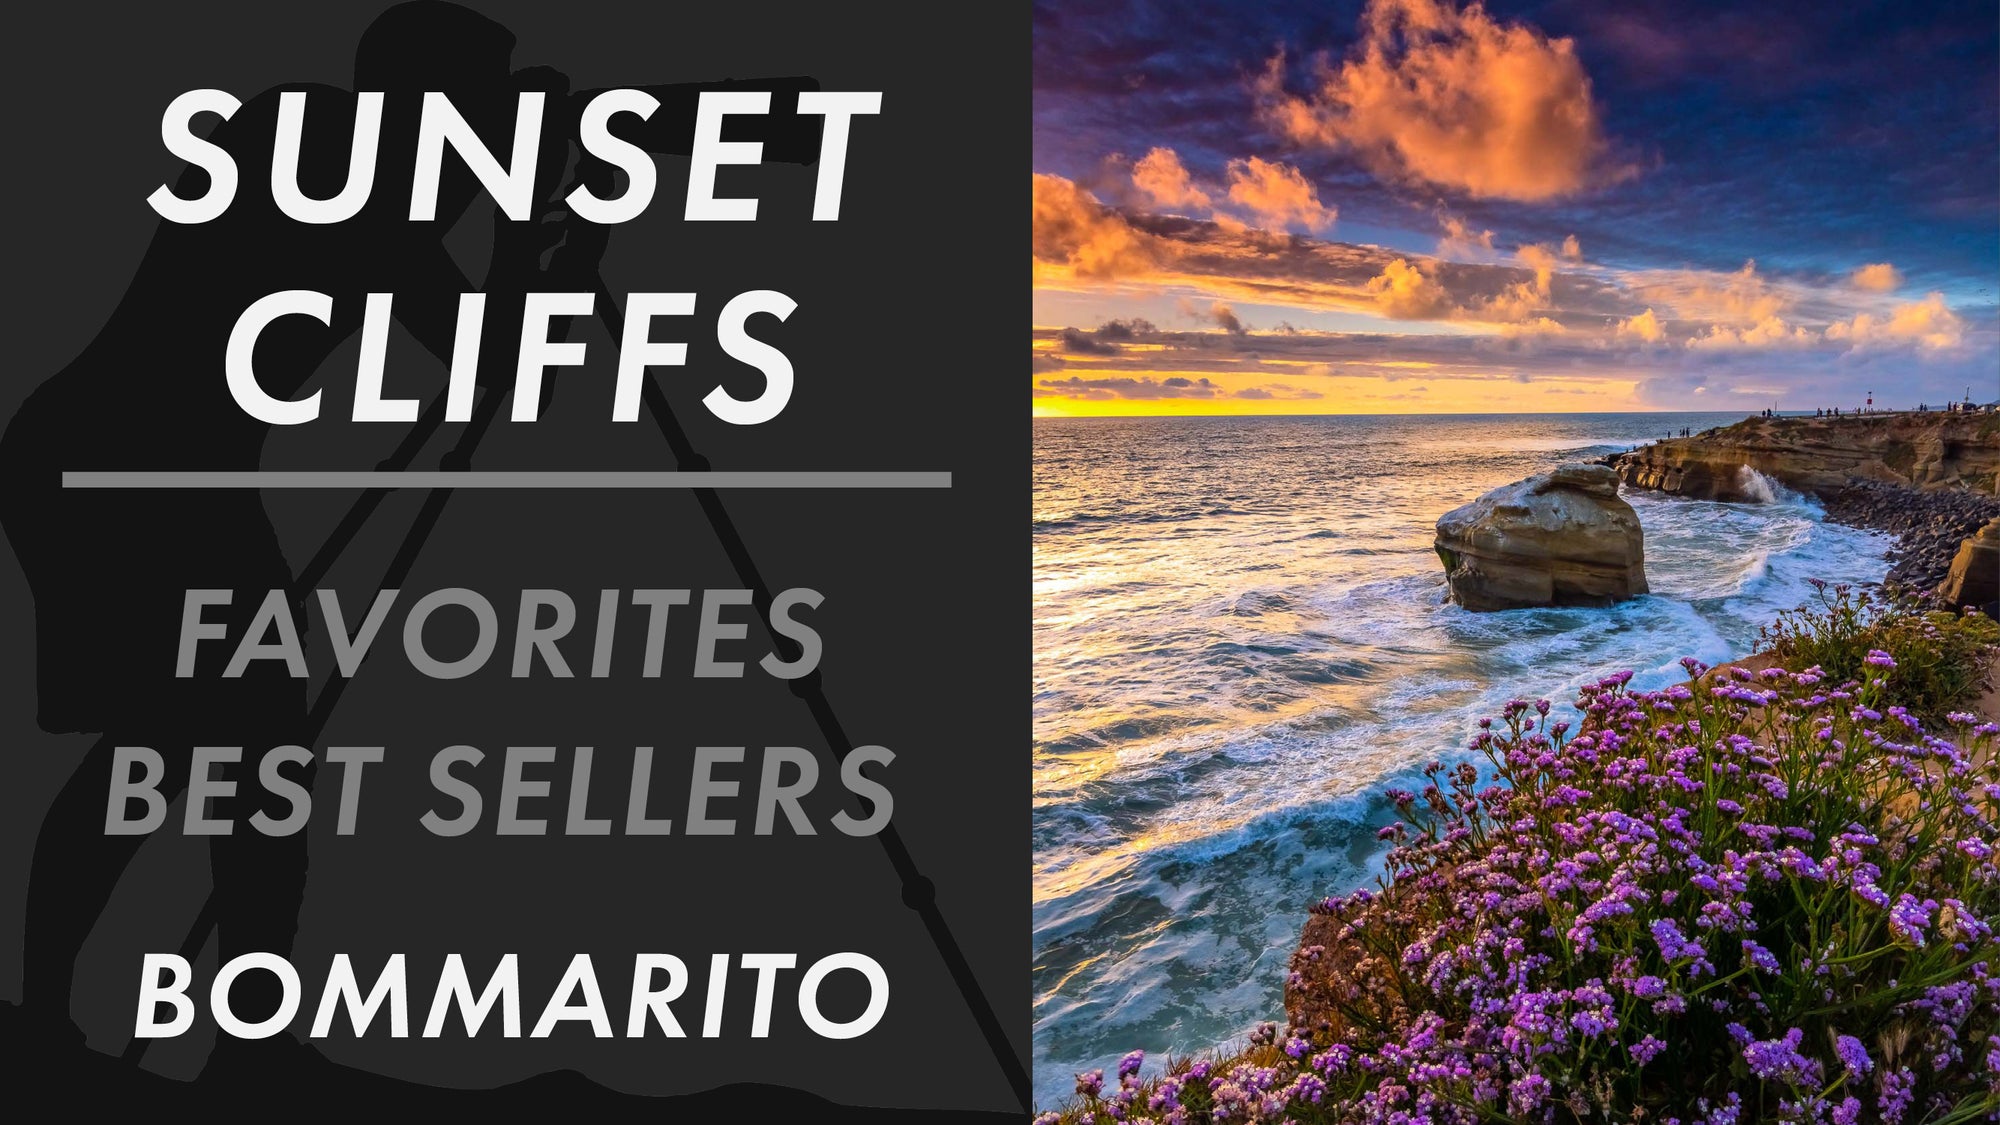 Sunset Cliffs | Ocean Art Gallery San Diego - Bommarito Ocean Art Gallery | Daniel Bommarito, Artist and Jeff Bommarito